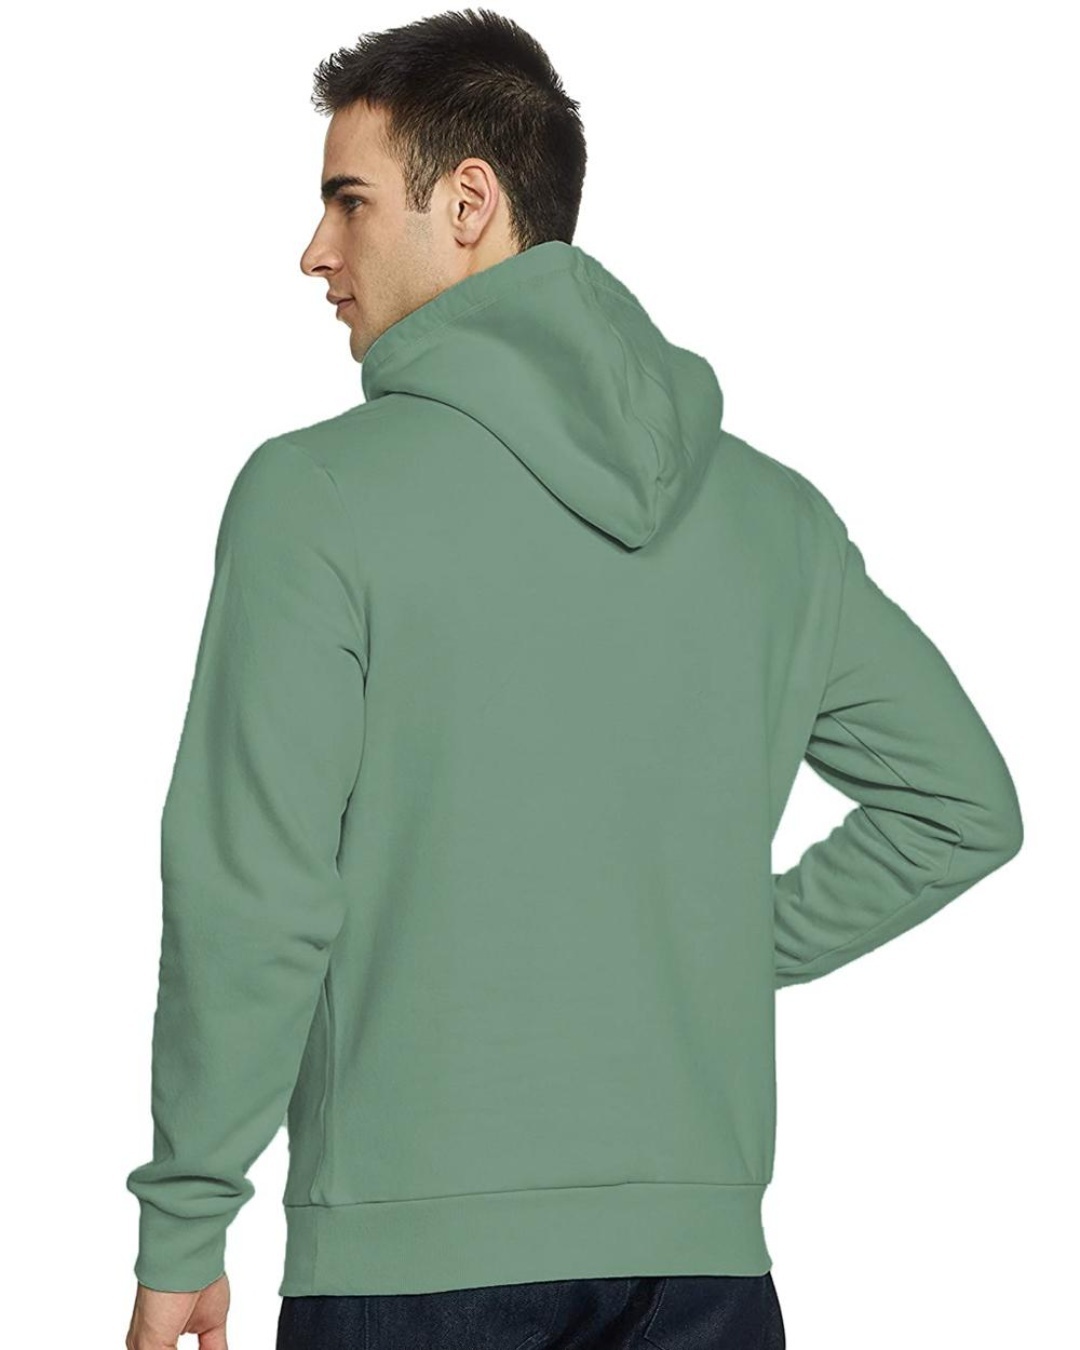 Shop Men's Green Hoodie-Back